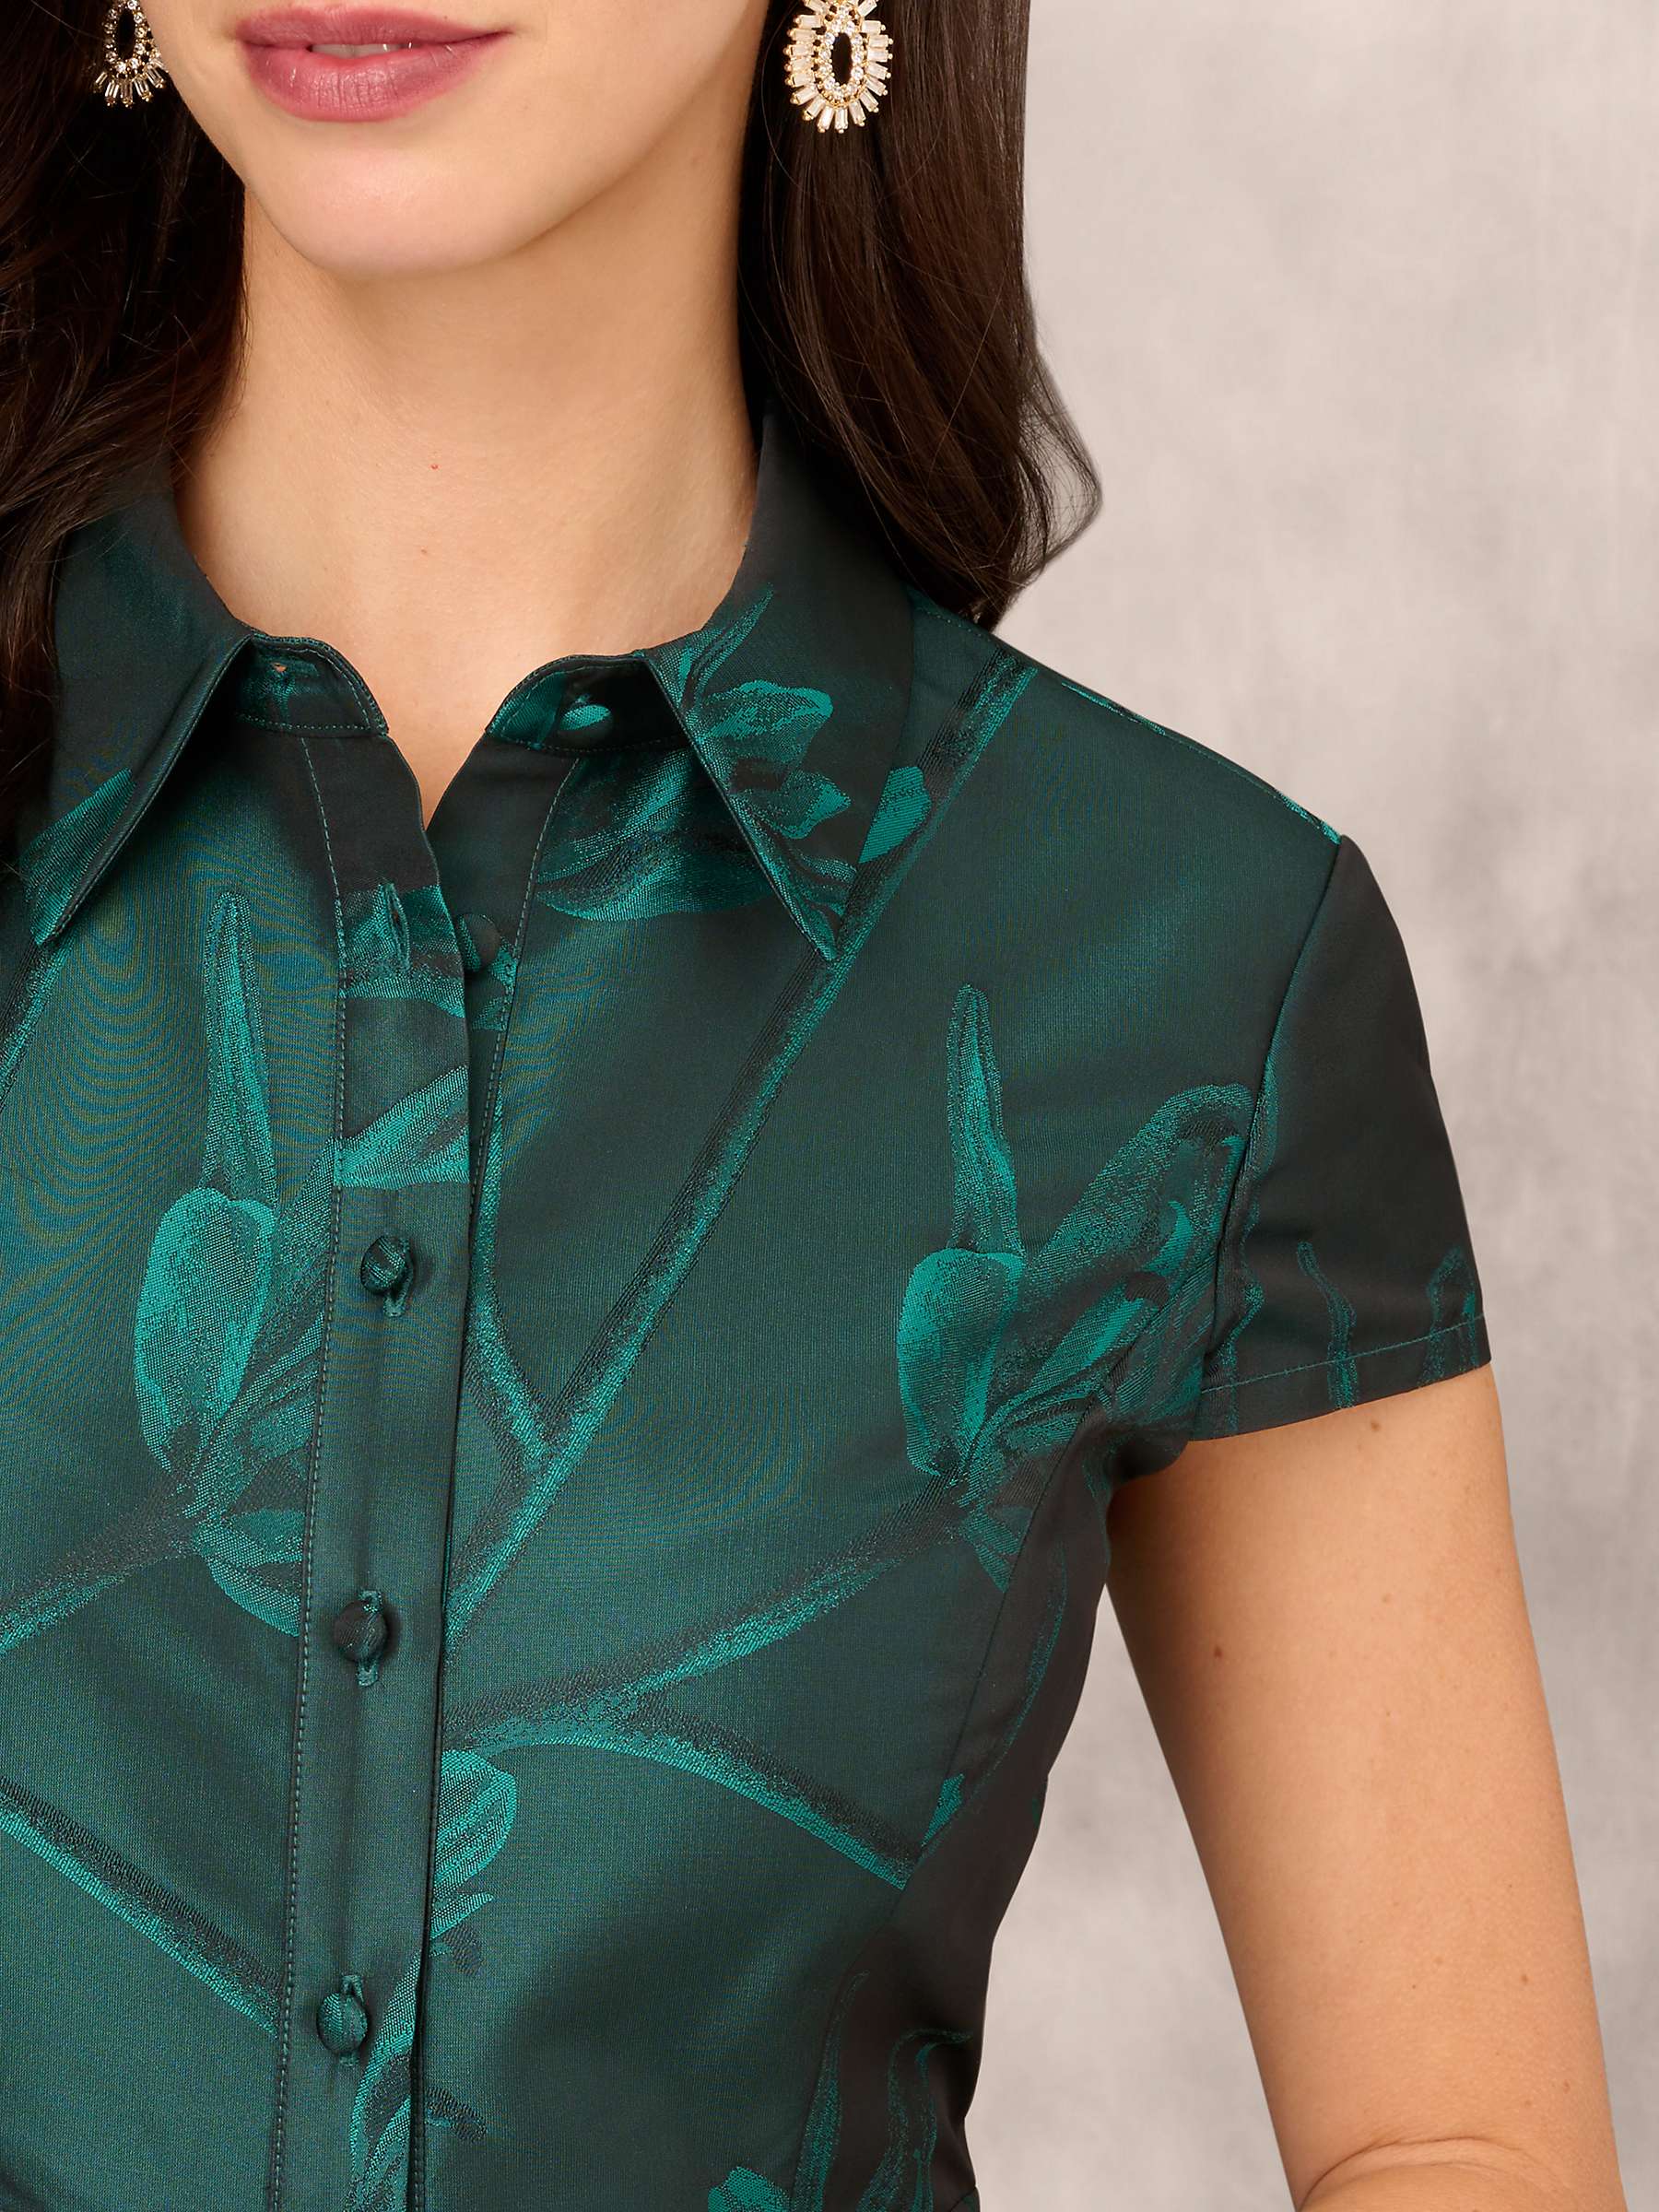 Buy Aidan Mattox by Adrianna Papell Midi Floral Jacquard Shirt Dress, Green Online at johnlewis.com